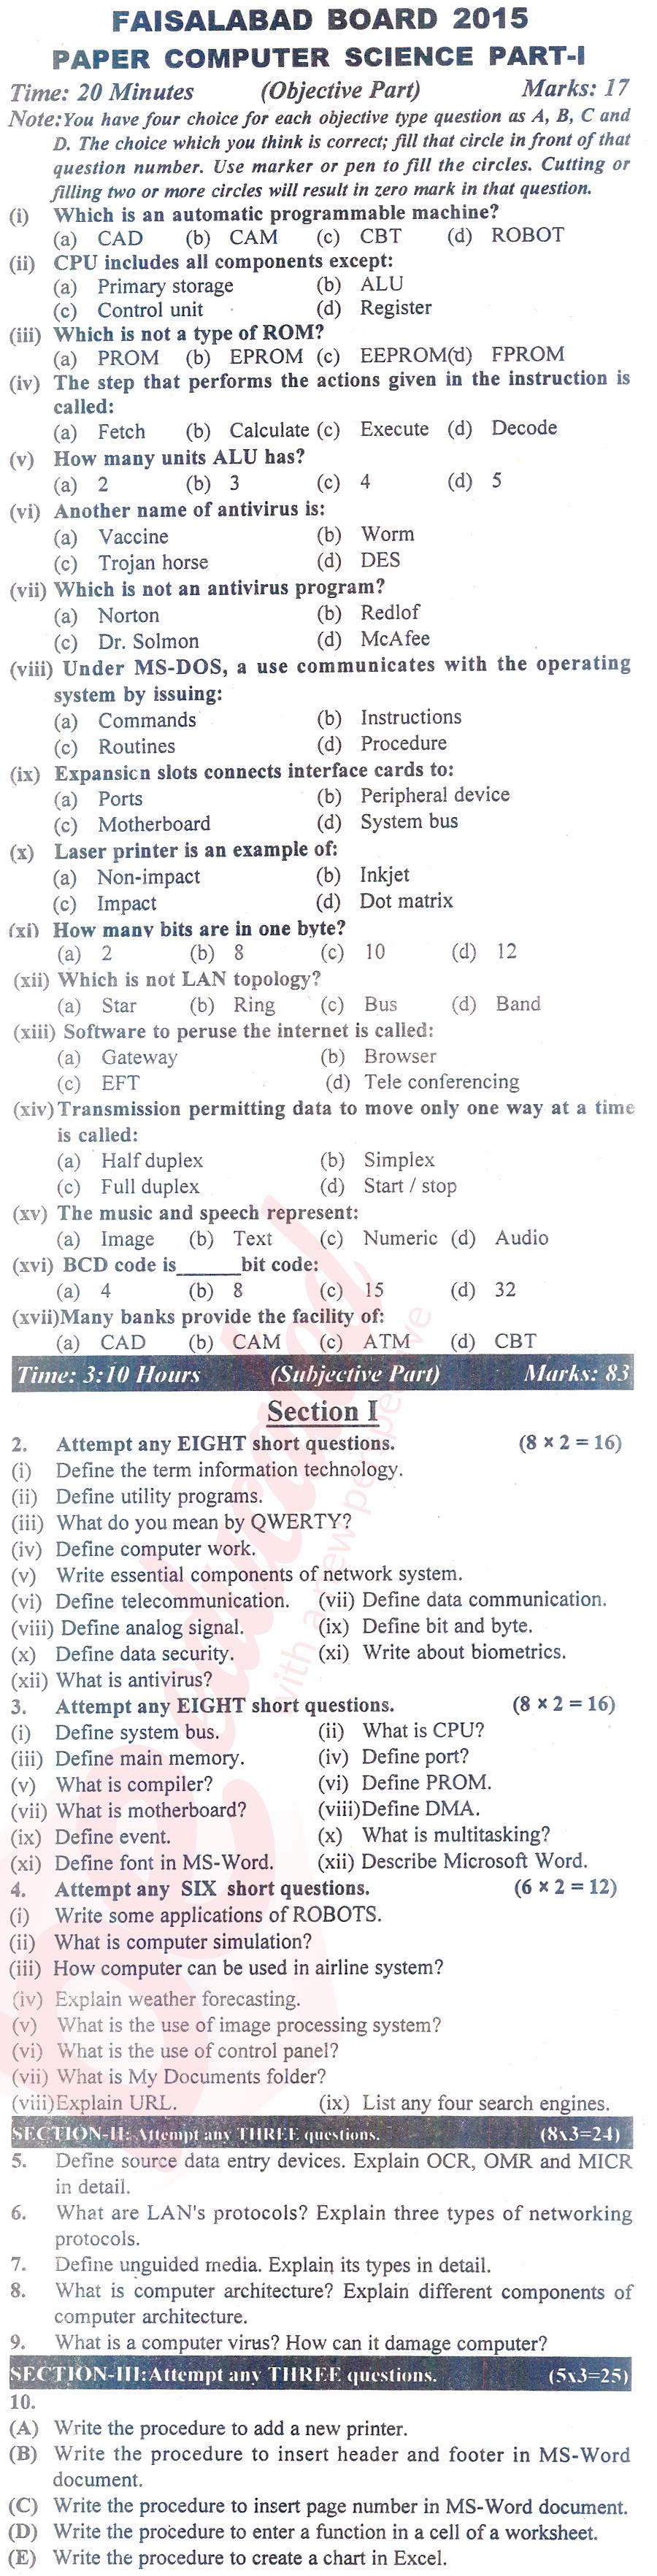 Computer Science ICS Part 1 Past Paper Group 1 BISE Faisalabad 2015